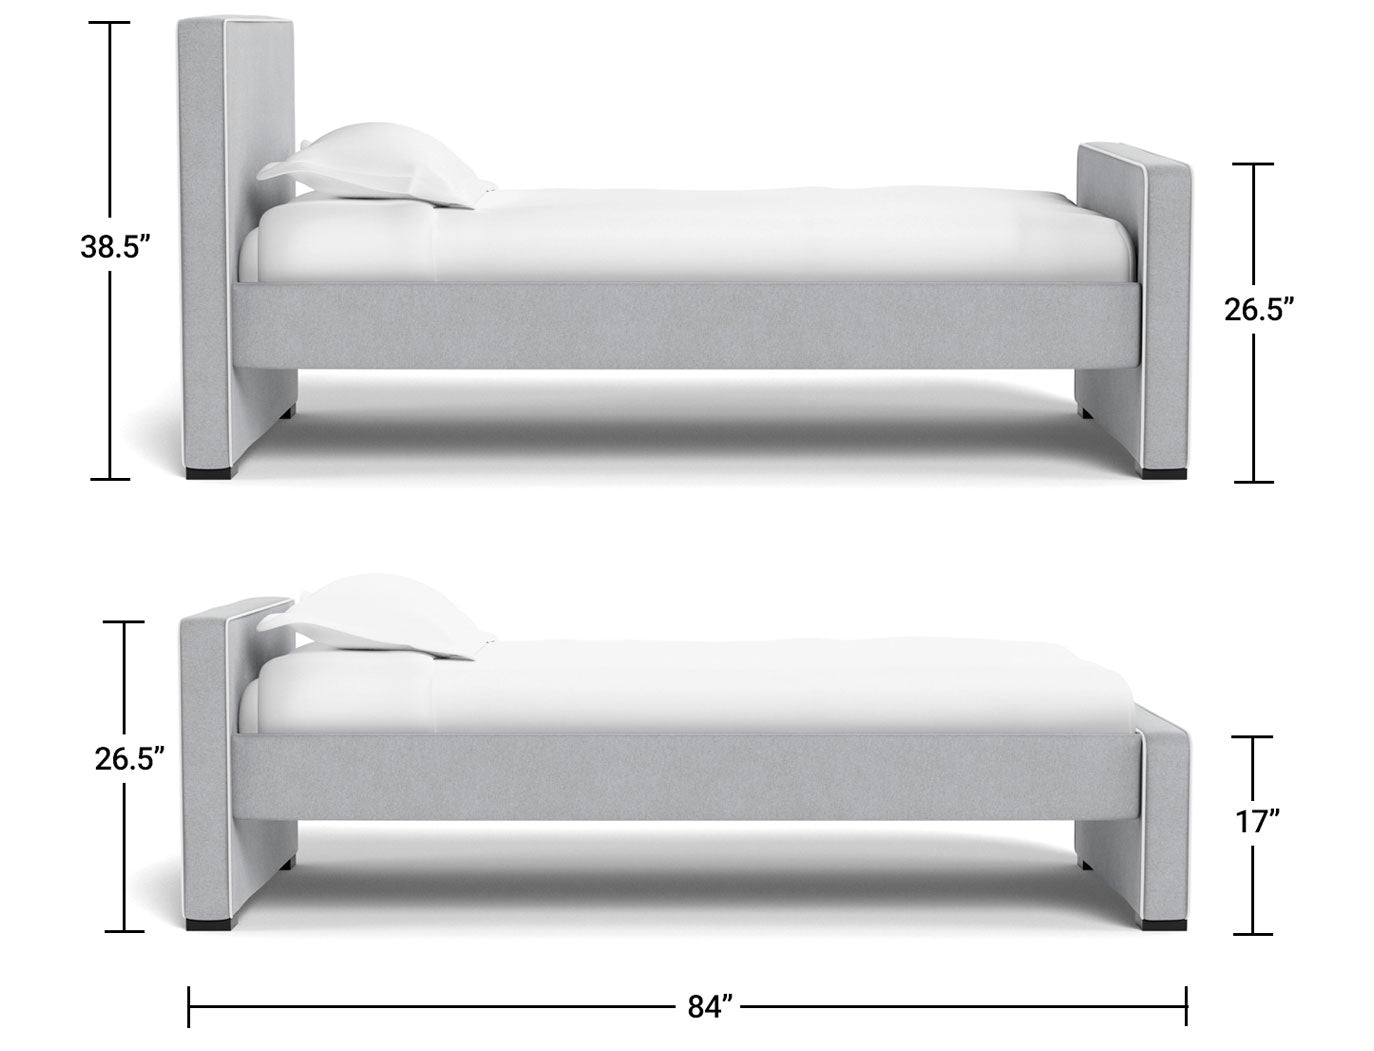 Dorma twin bed dimensions